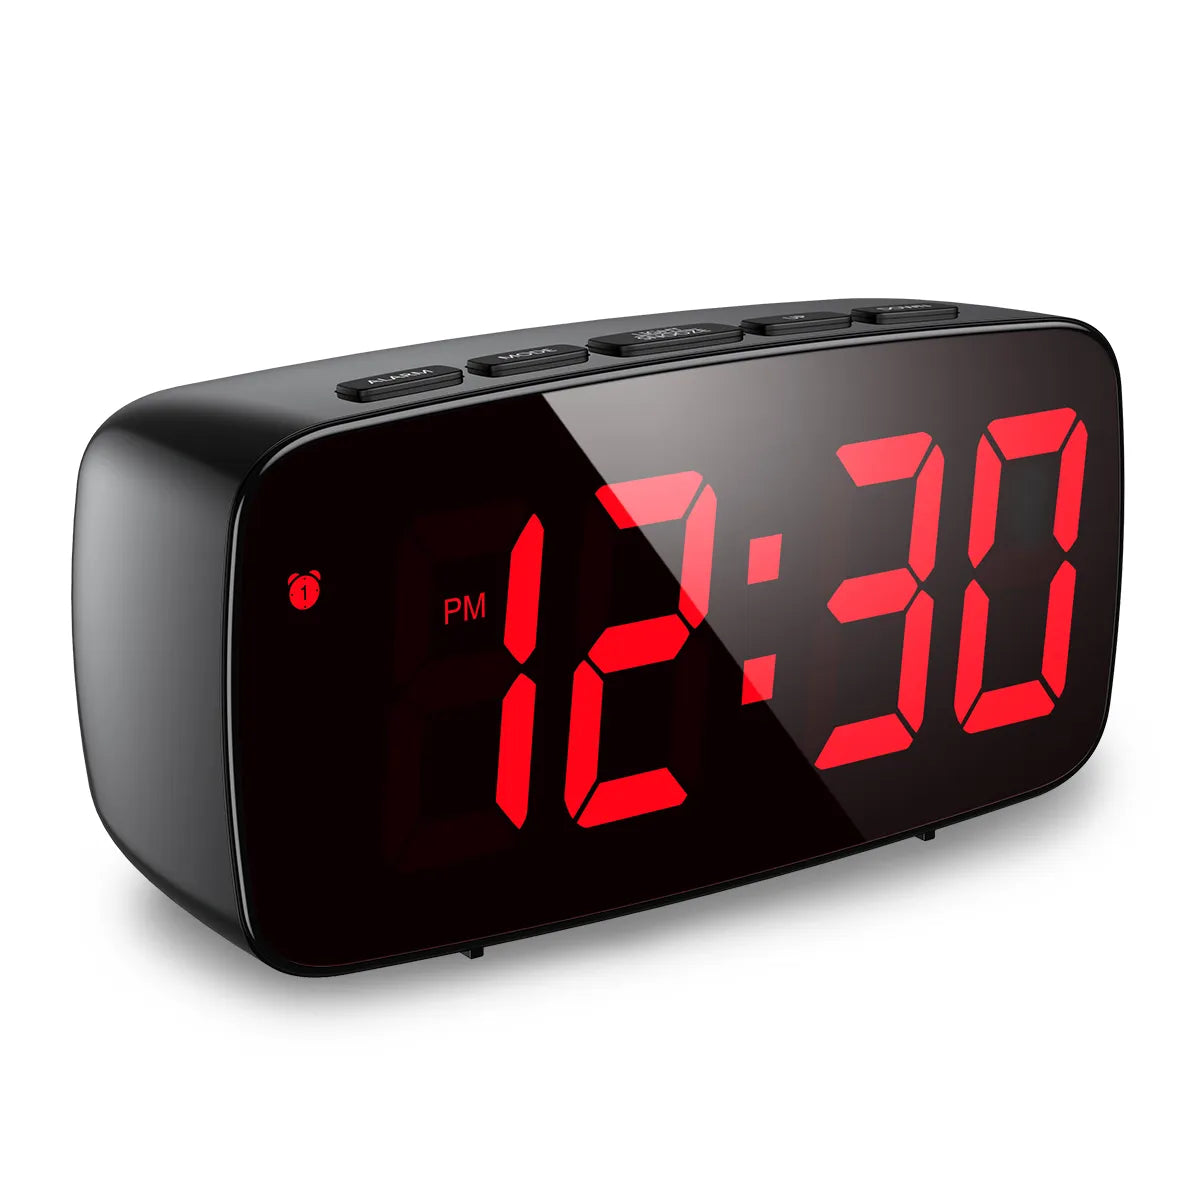 Digital LED Clock Alarm Clock Voice Control Snooze Time Temperature Display Night Mode Desktop Clocks